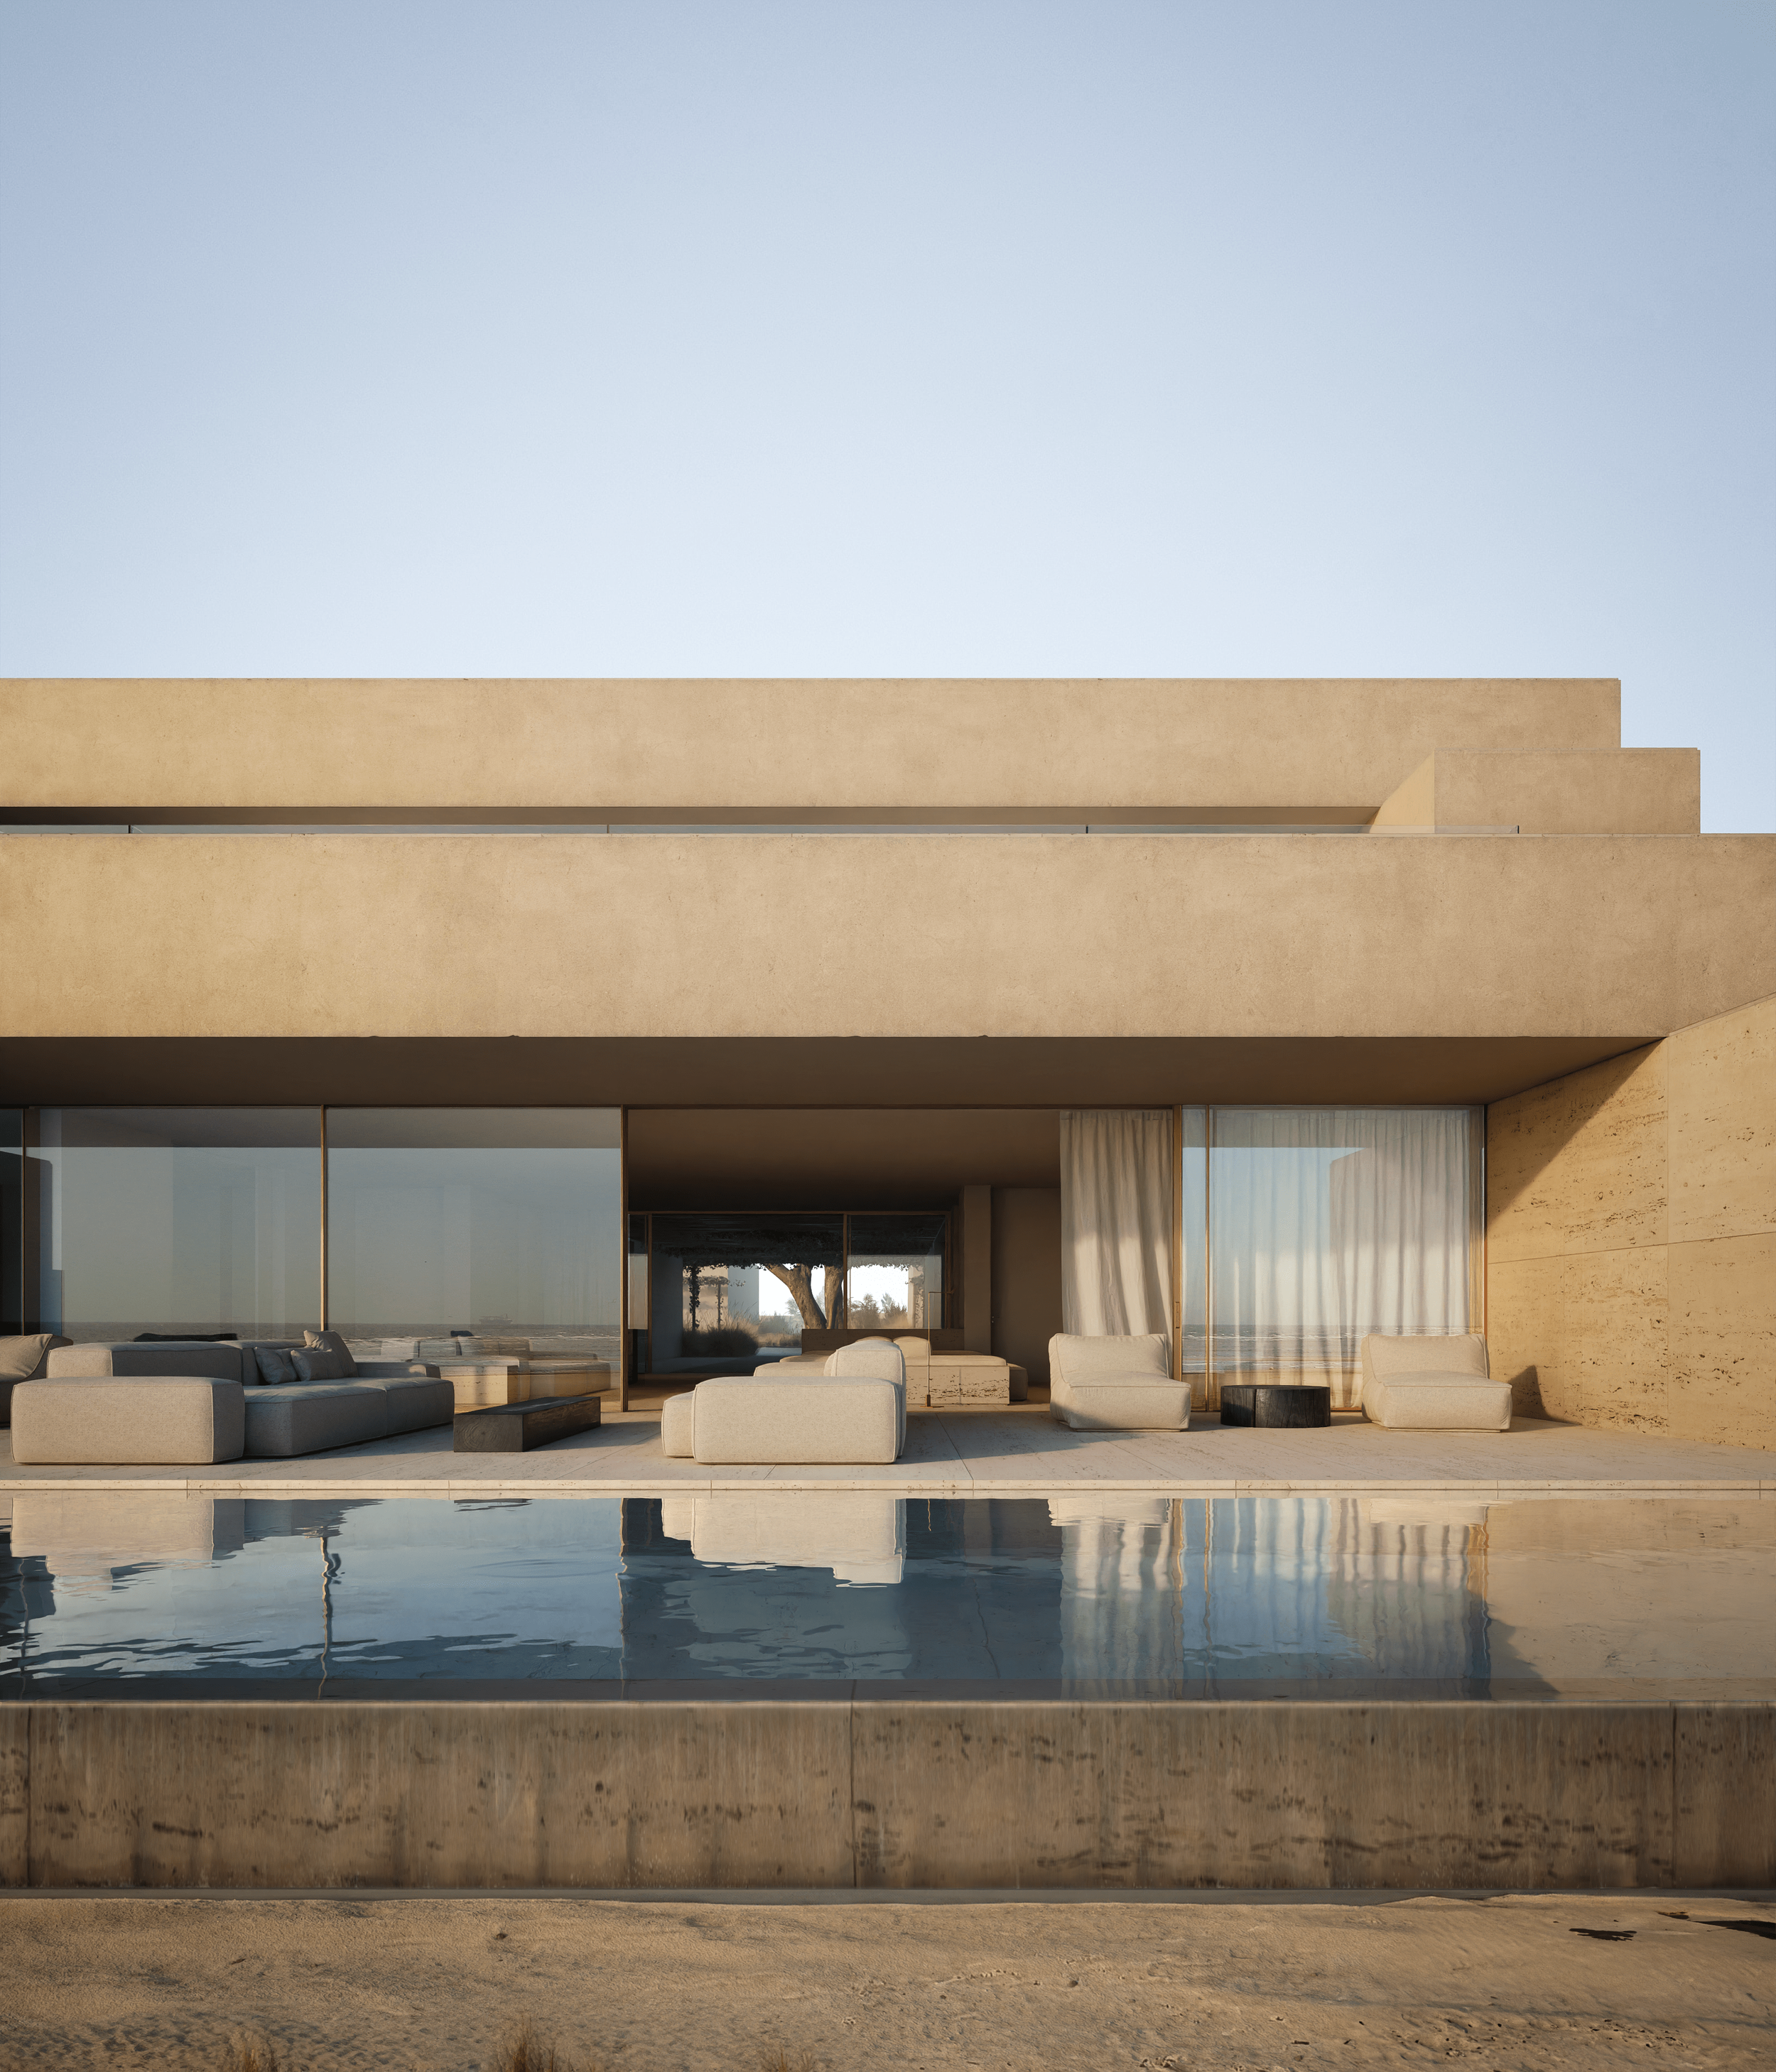 BEACH-HOUSE-ALHUMAIDHI-BALZAR-ARCHITECTS-KUWAIT-E-04-min.png